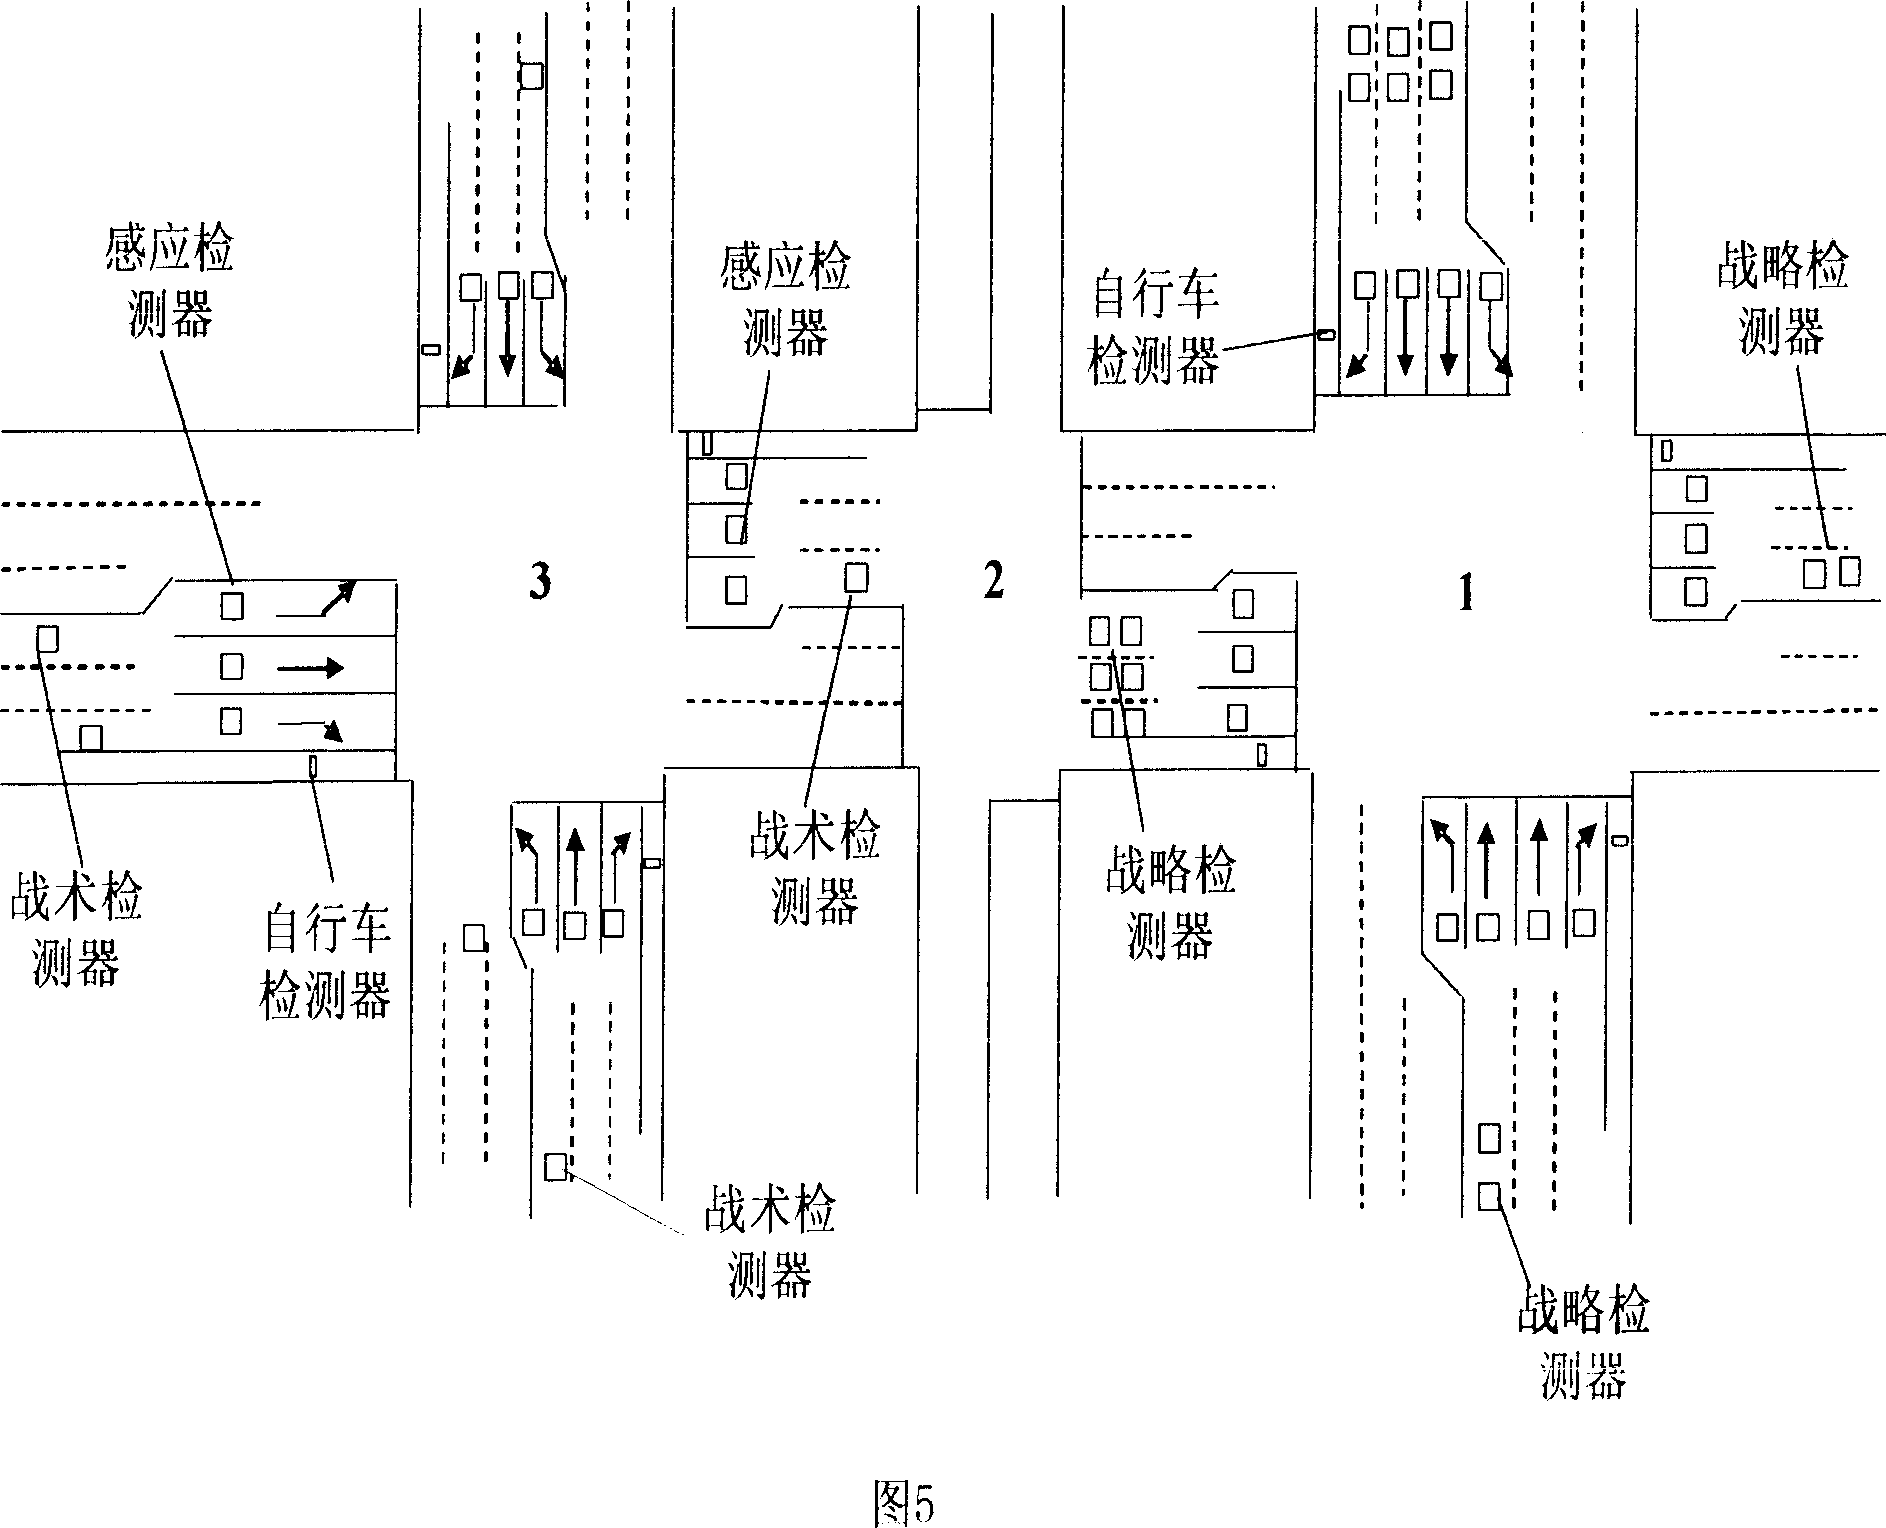 Detector layout method for urban traffic signal control system